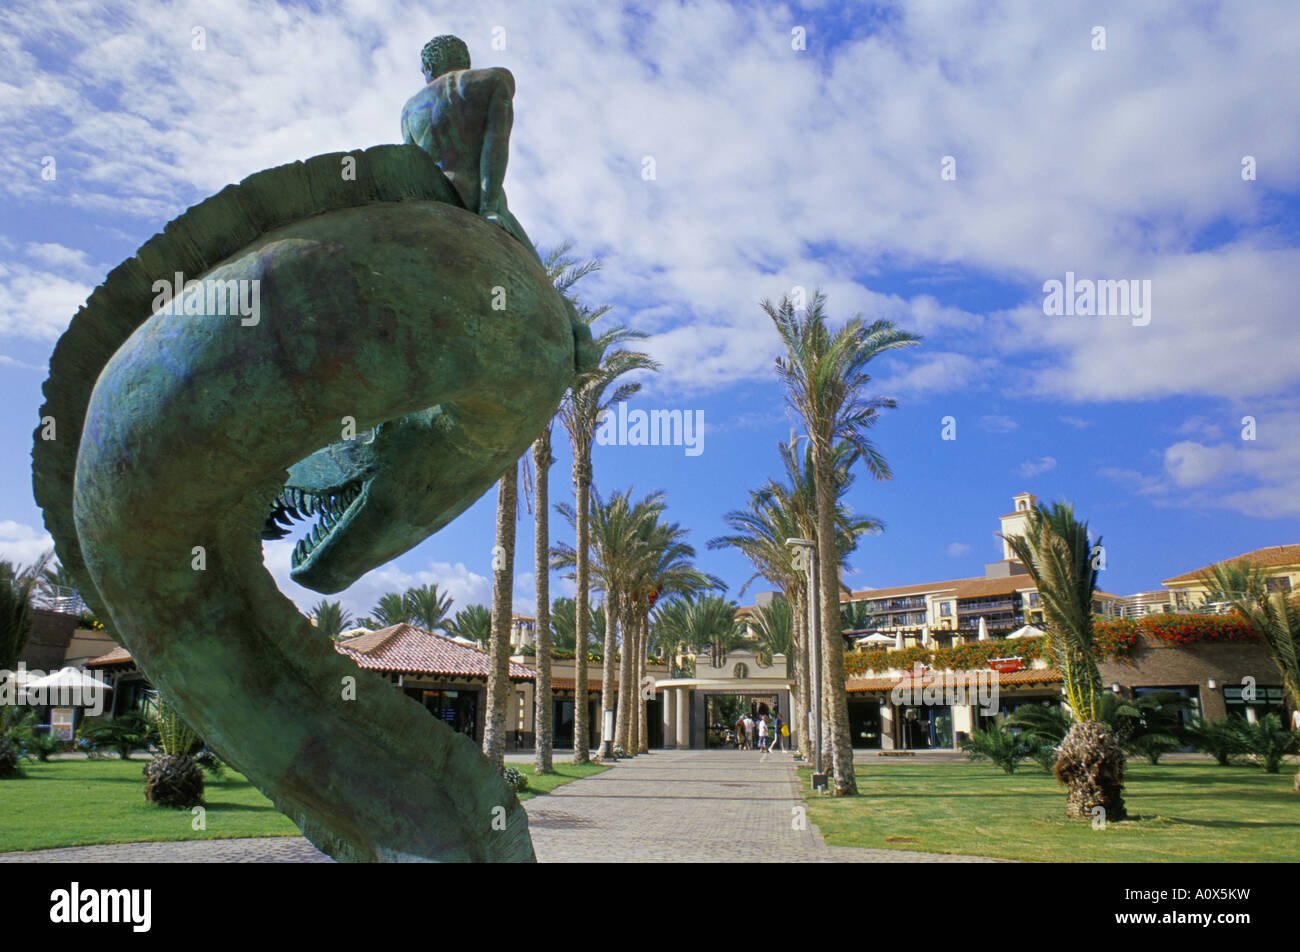 Skulptur und Hotel darüber hinaus in der Nähe von Maspalomas Strand Maspalomas Gran Canaria Kanaren Spanien Atlantik Europa Stockfoto